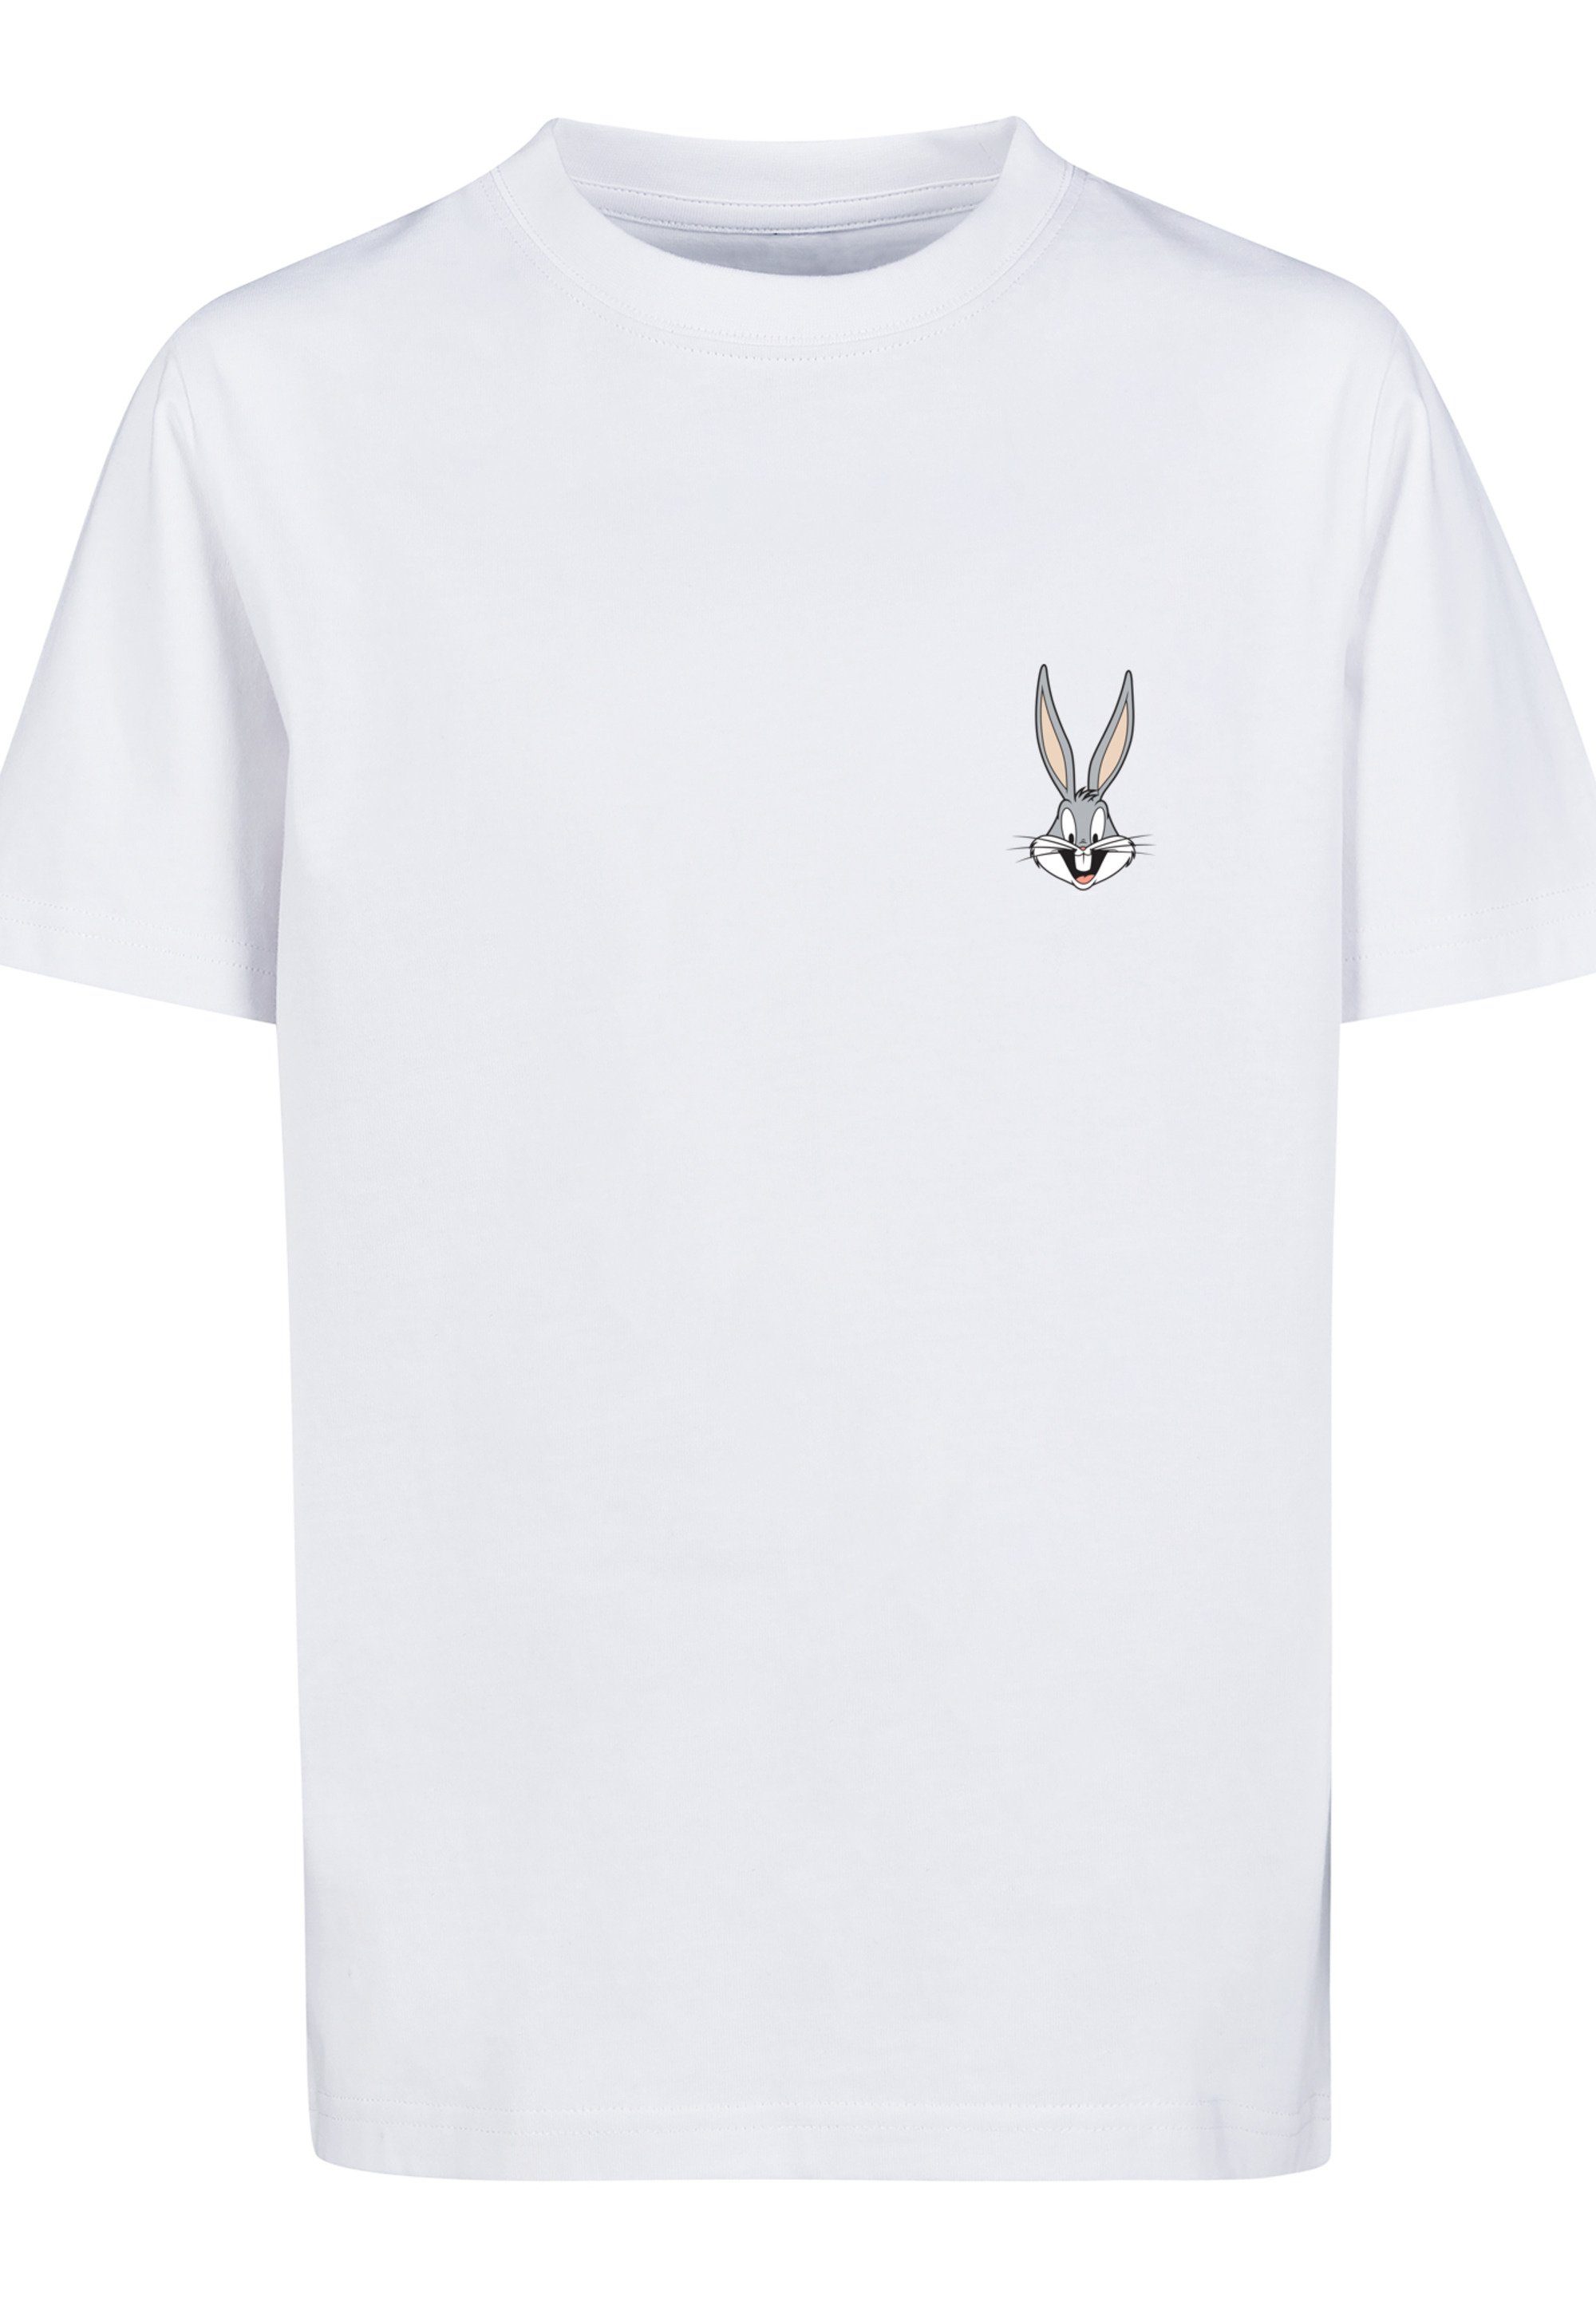 F4NT4STIC T-Shirt Looney weiß Bugs Print Bunny Breast Tunes Print